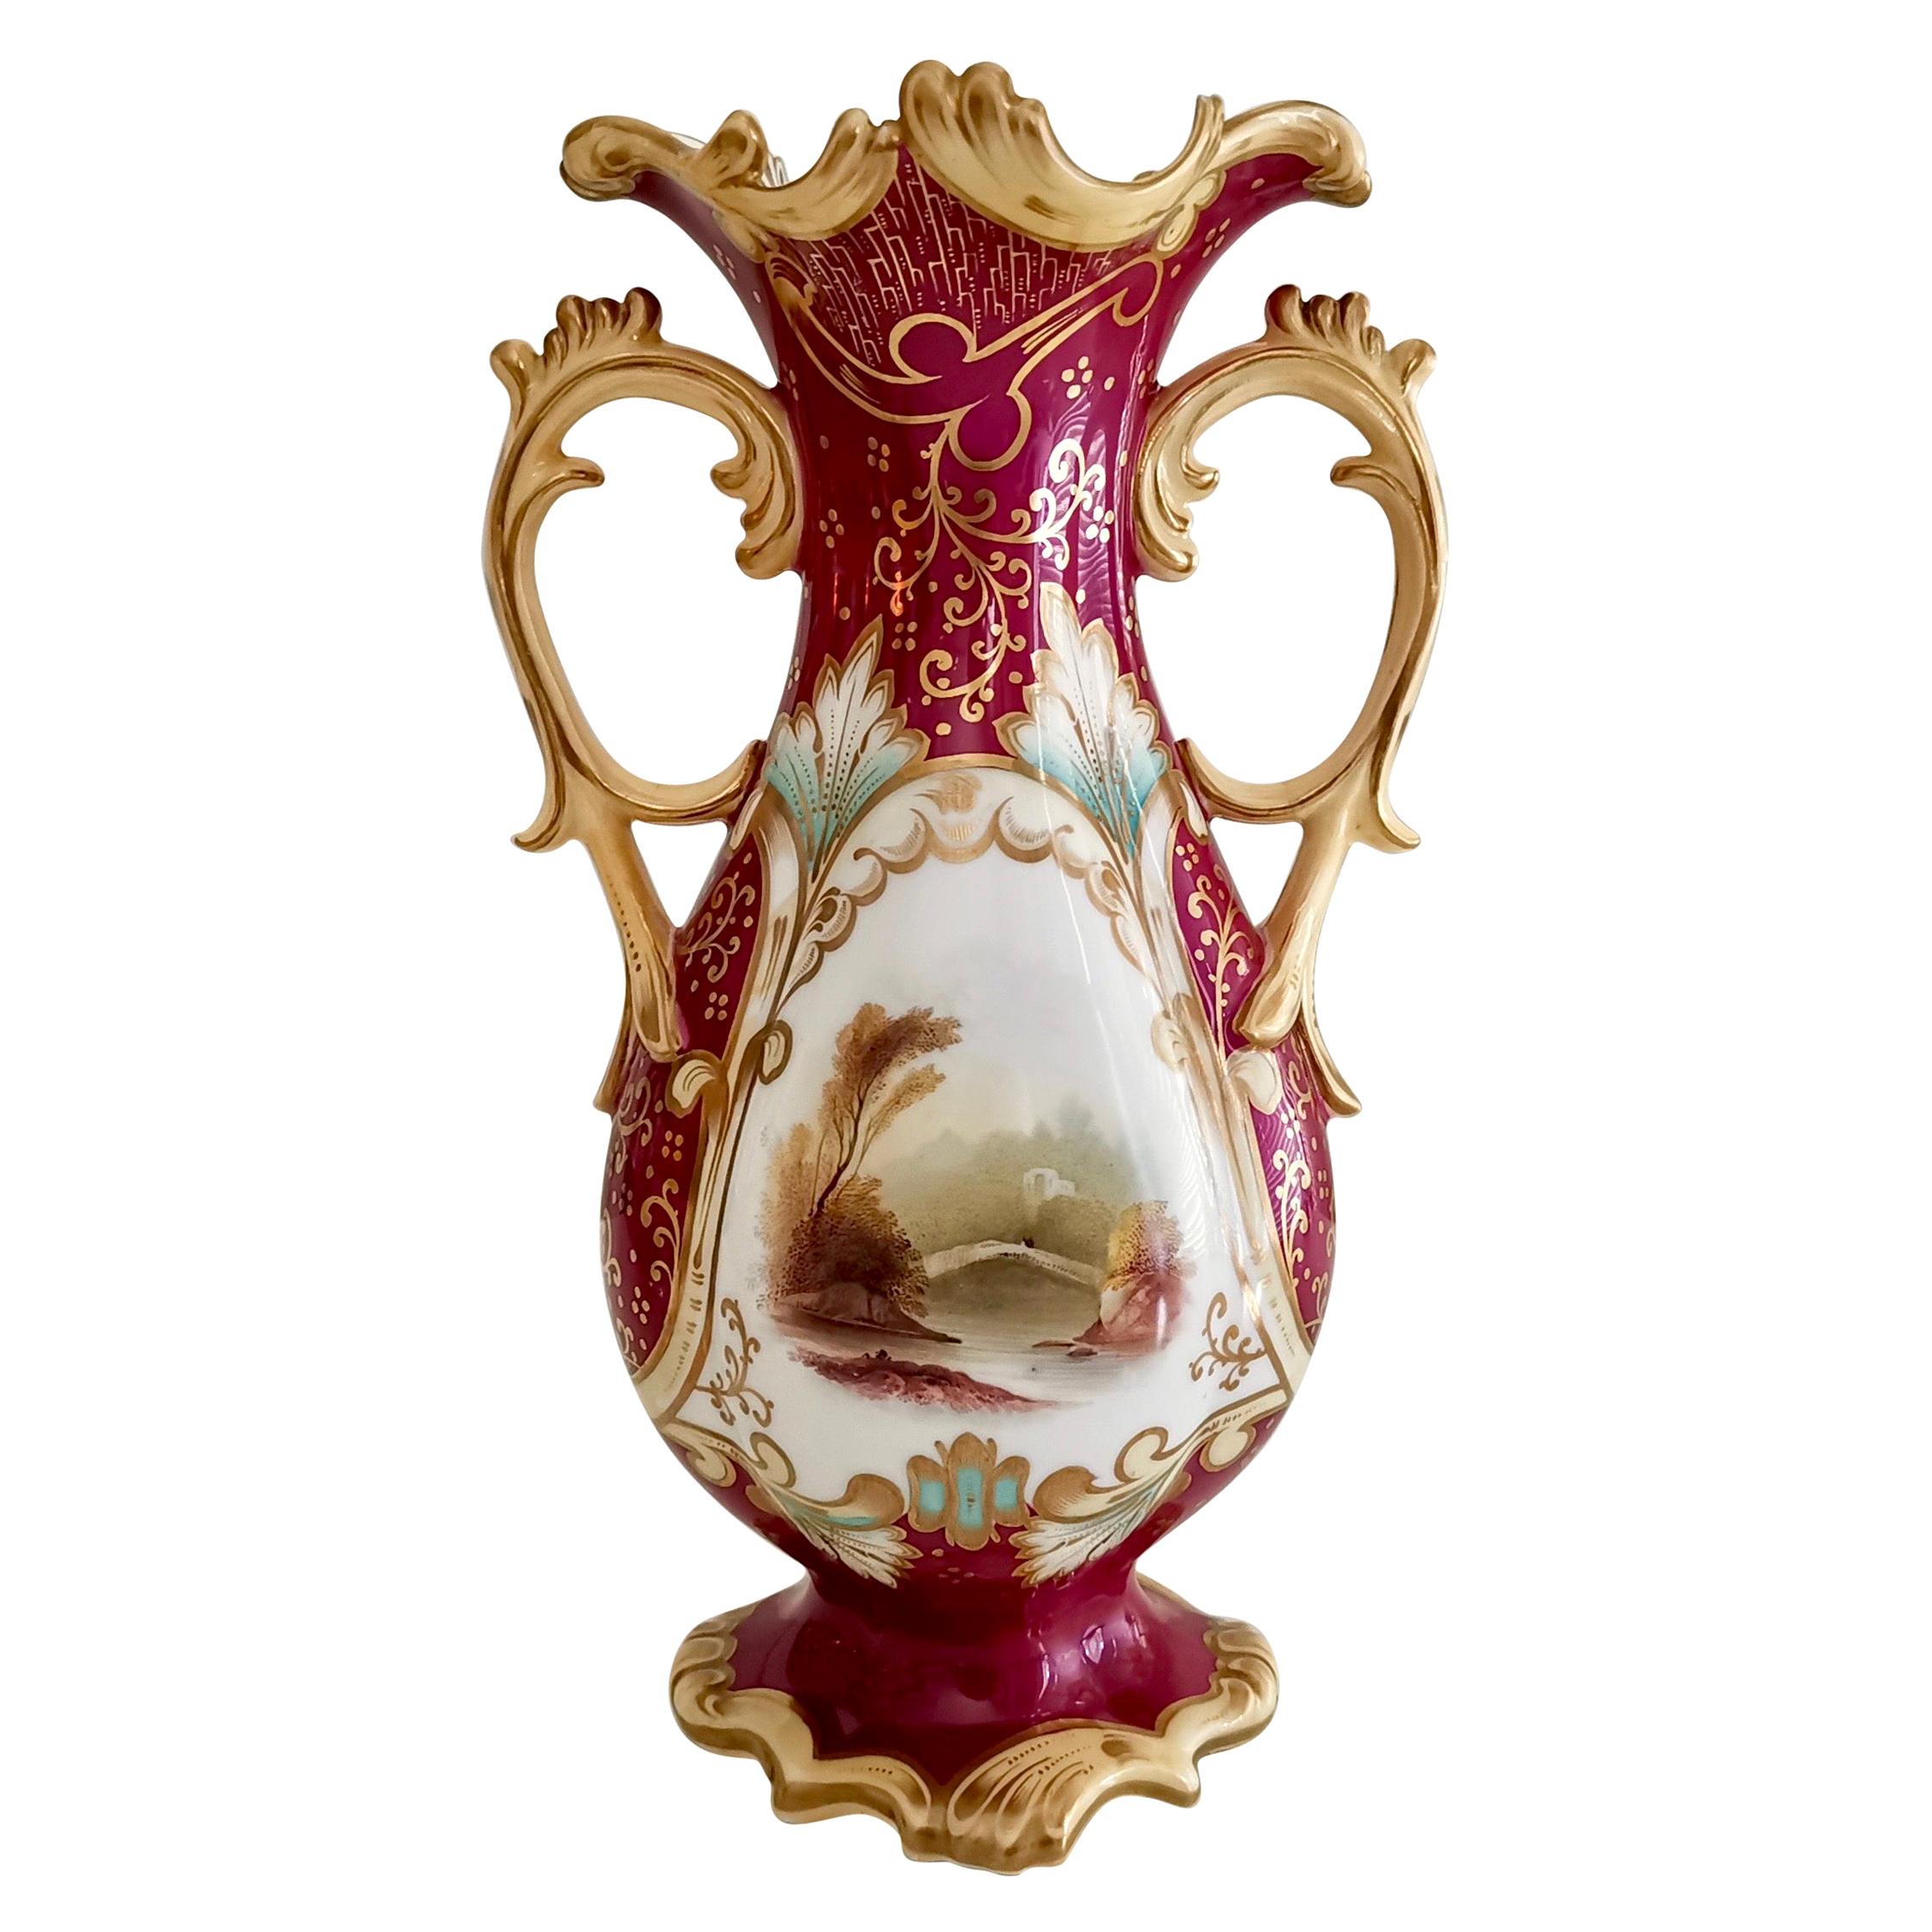 Samuel Alcock Porcelain Vase, Maroon with Landscapes, Rococo Revival, ca 1840